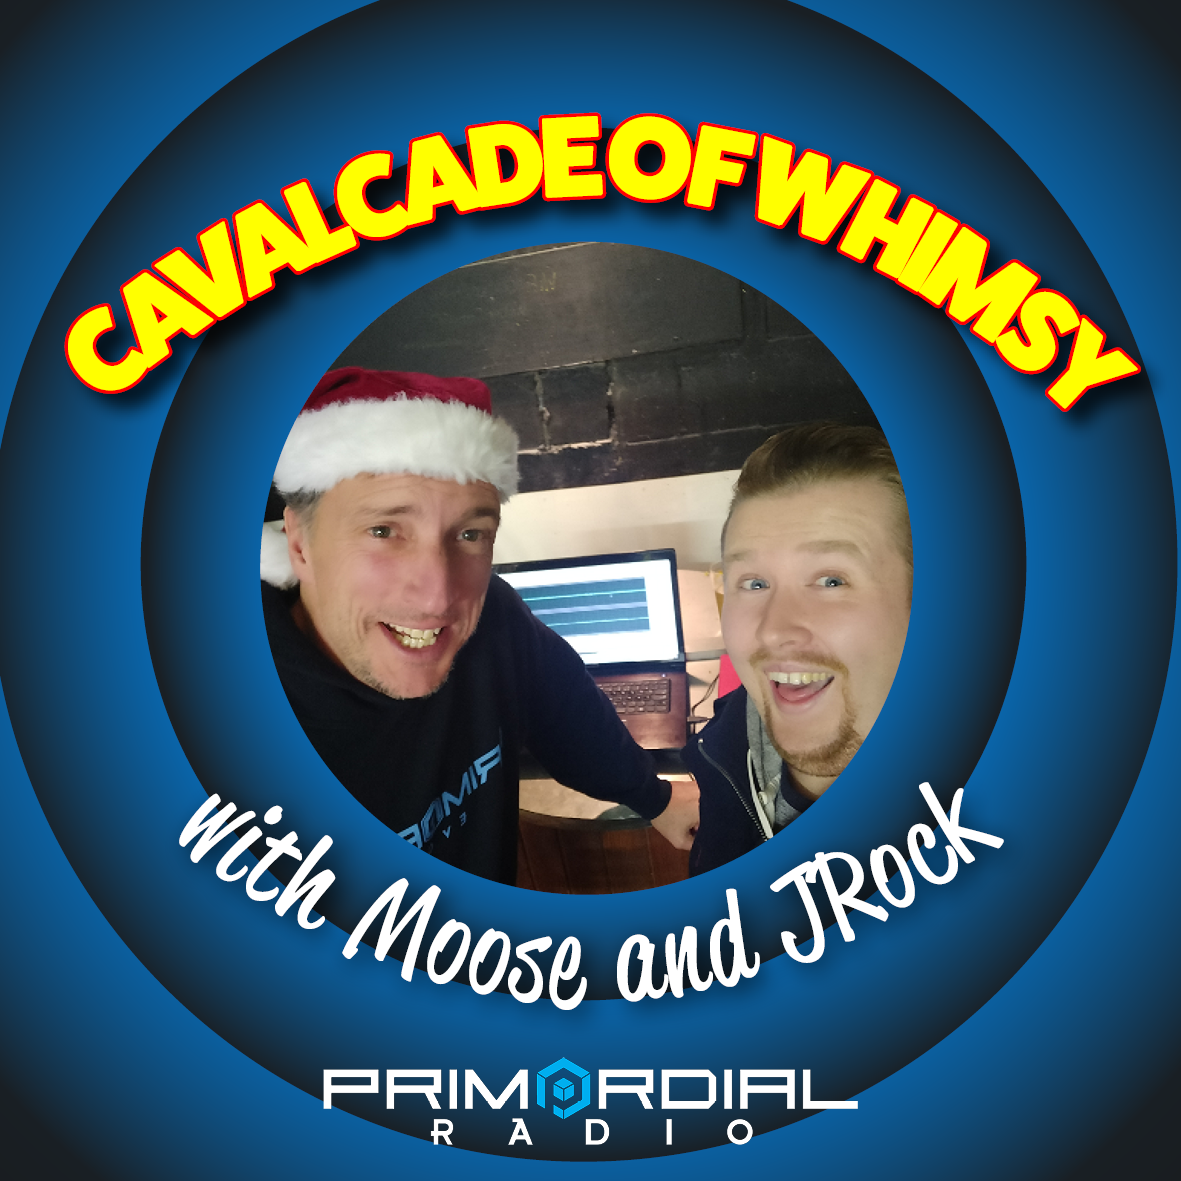 Cavalcade of Whimsy PodcastGraphic